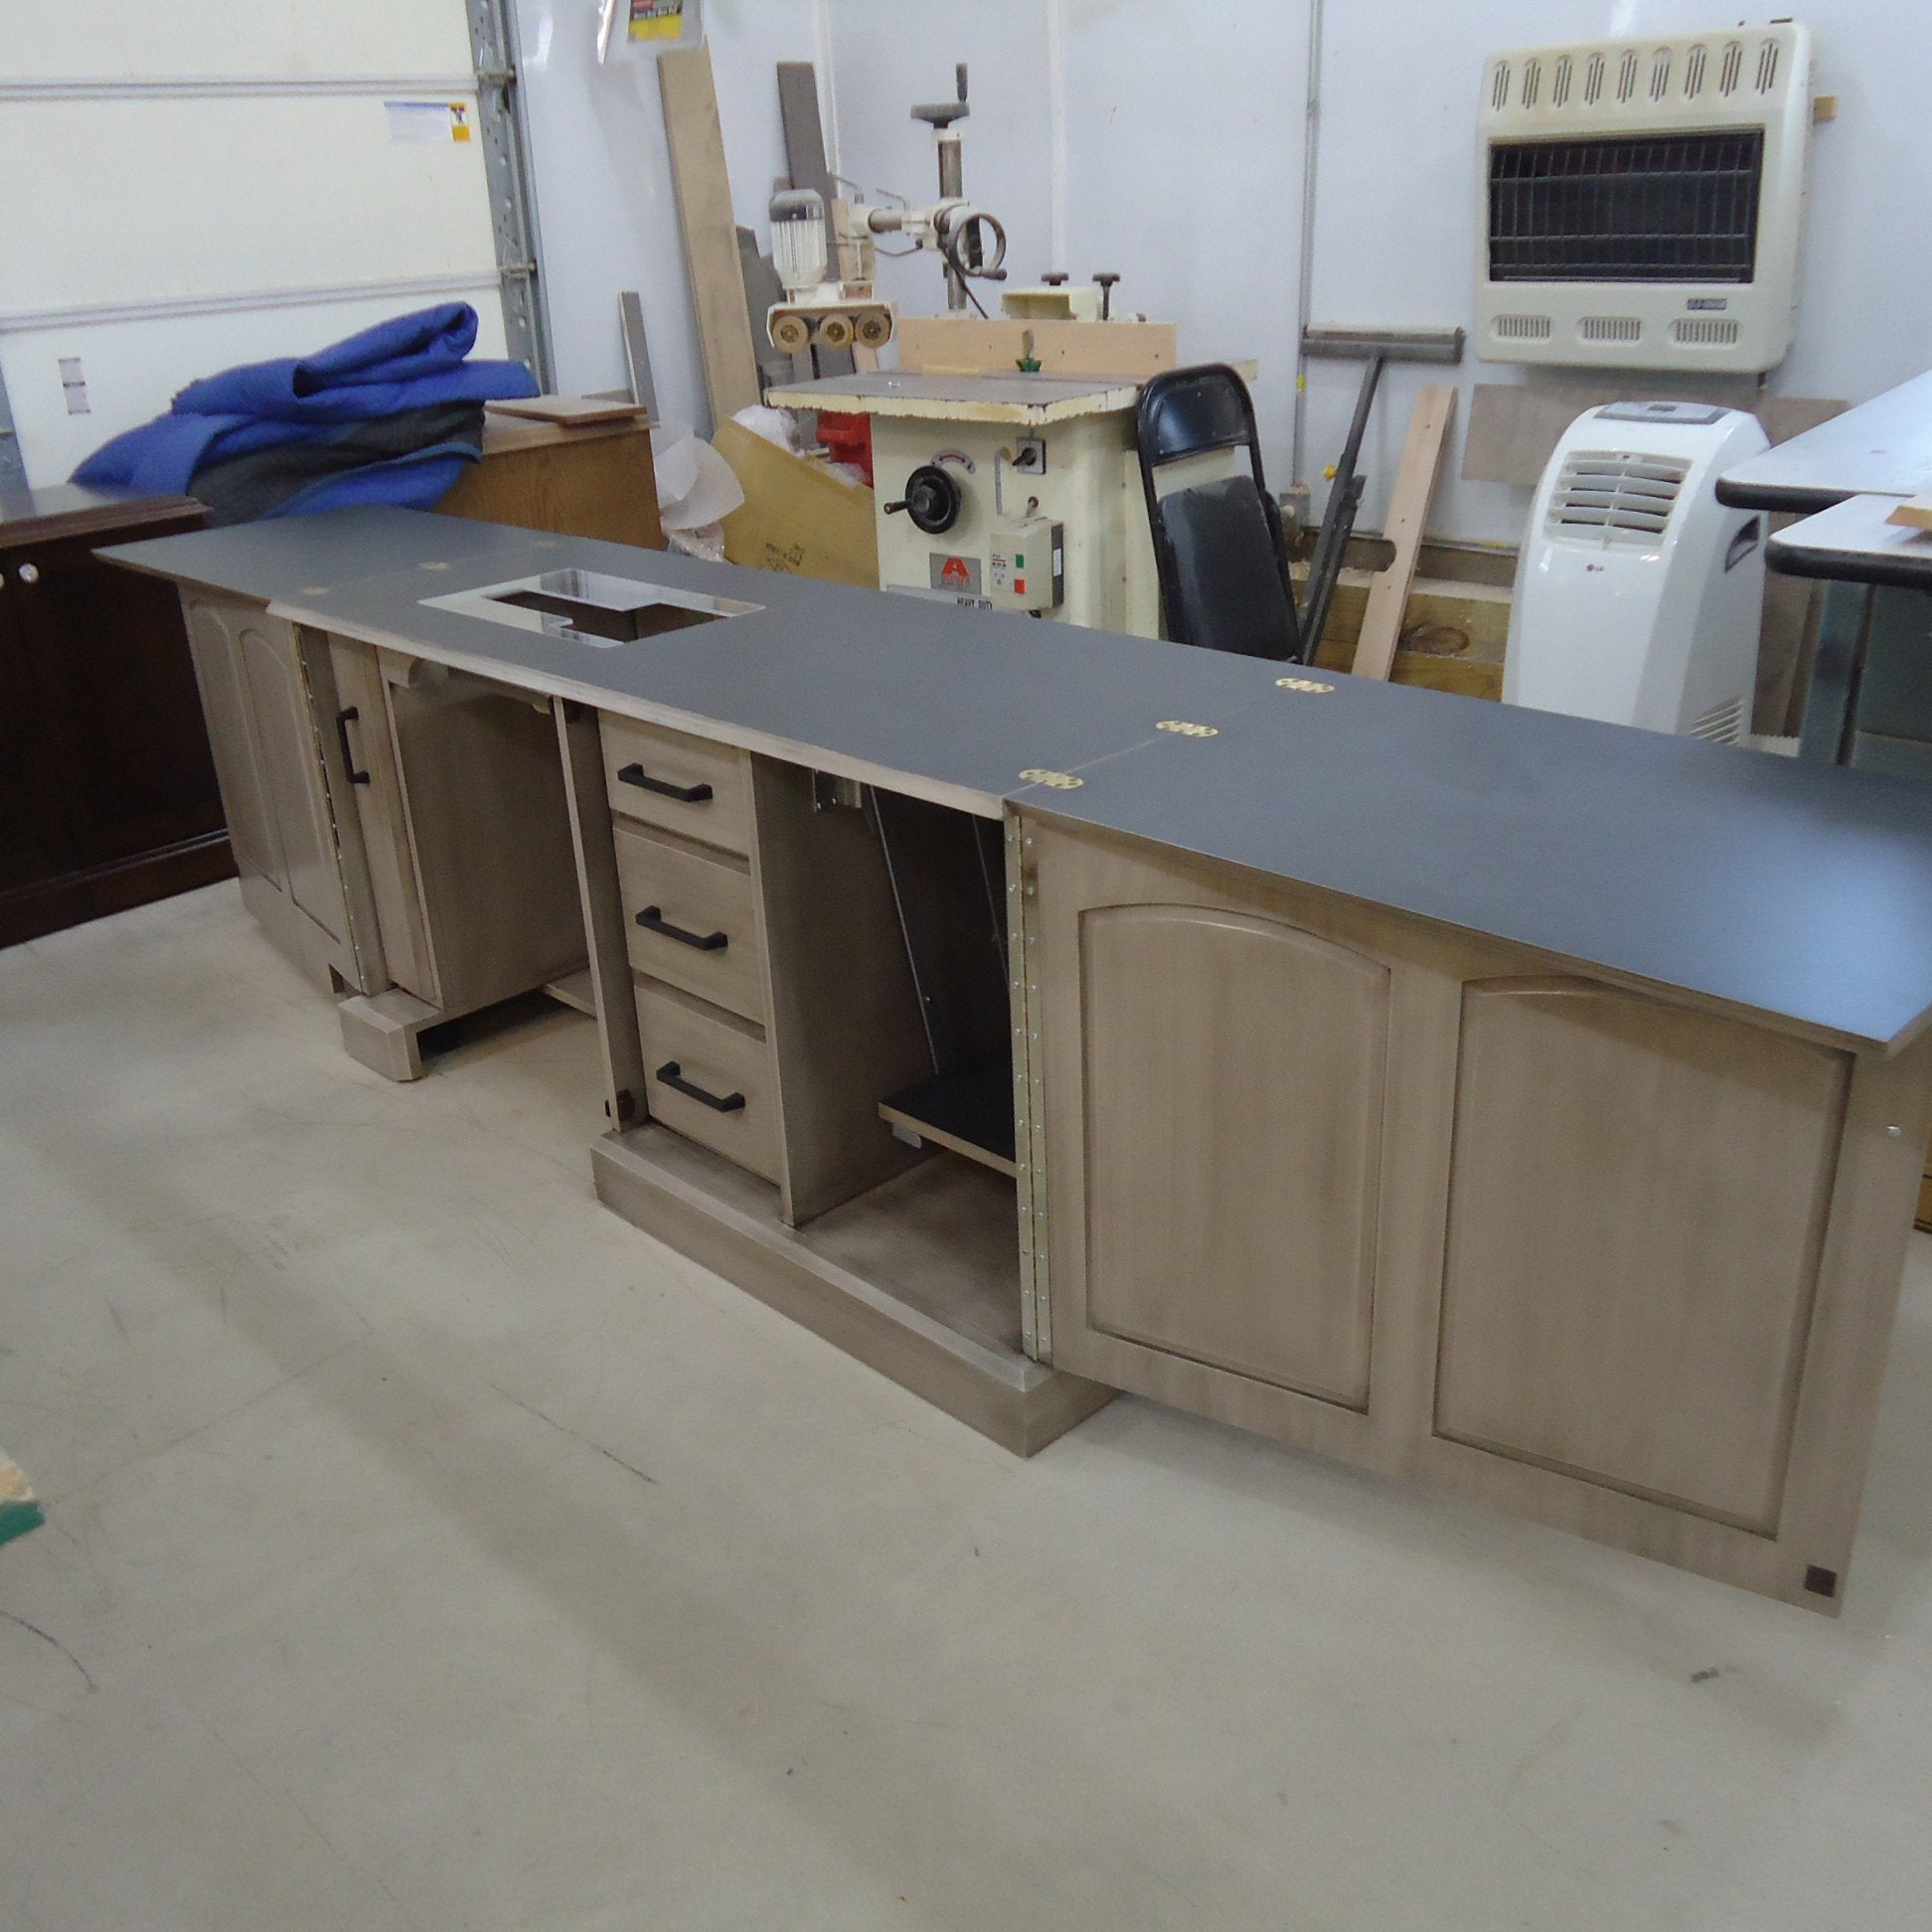 Sewing Serger-Kitchen Appliance Lift - Woodworking Kits